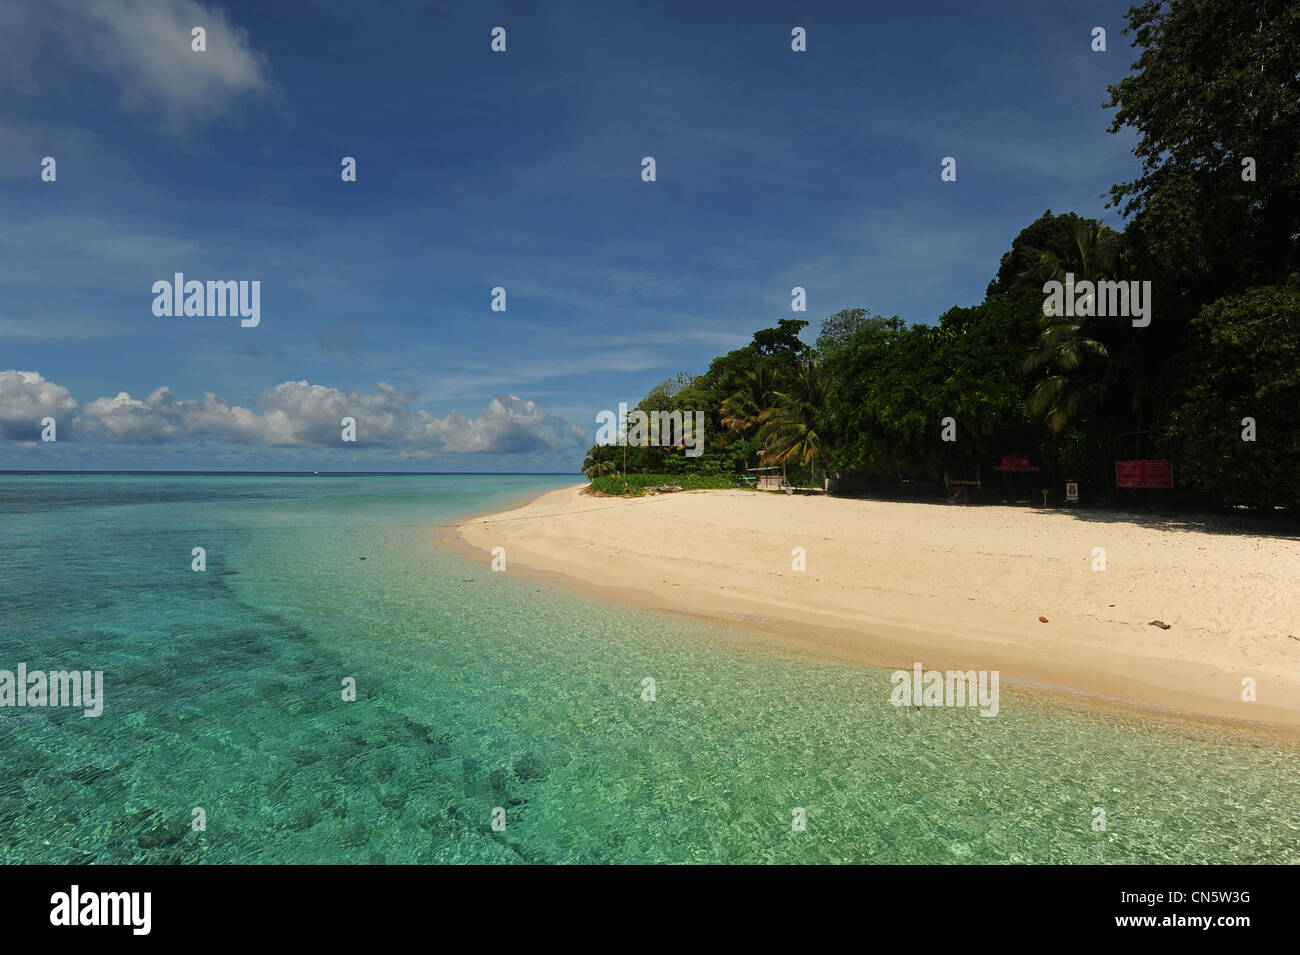 La Malaisie, Bornéo, Sabah State, Semporna, Sipadan, plage idyllique Banque D'Images